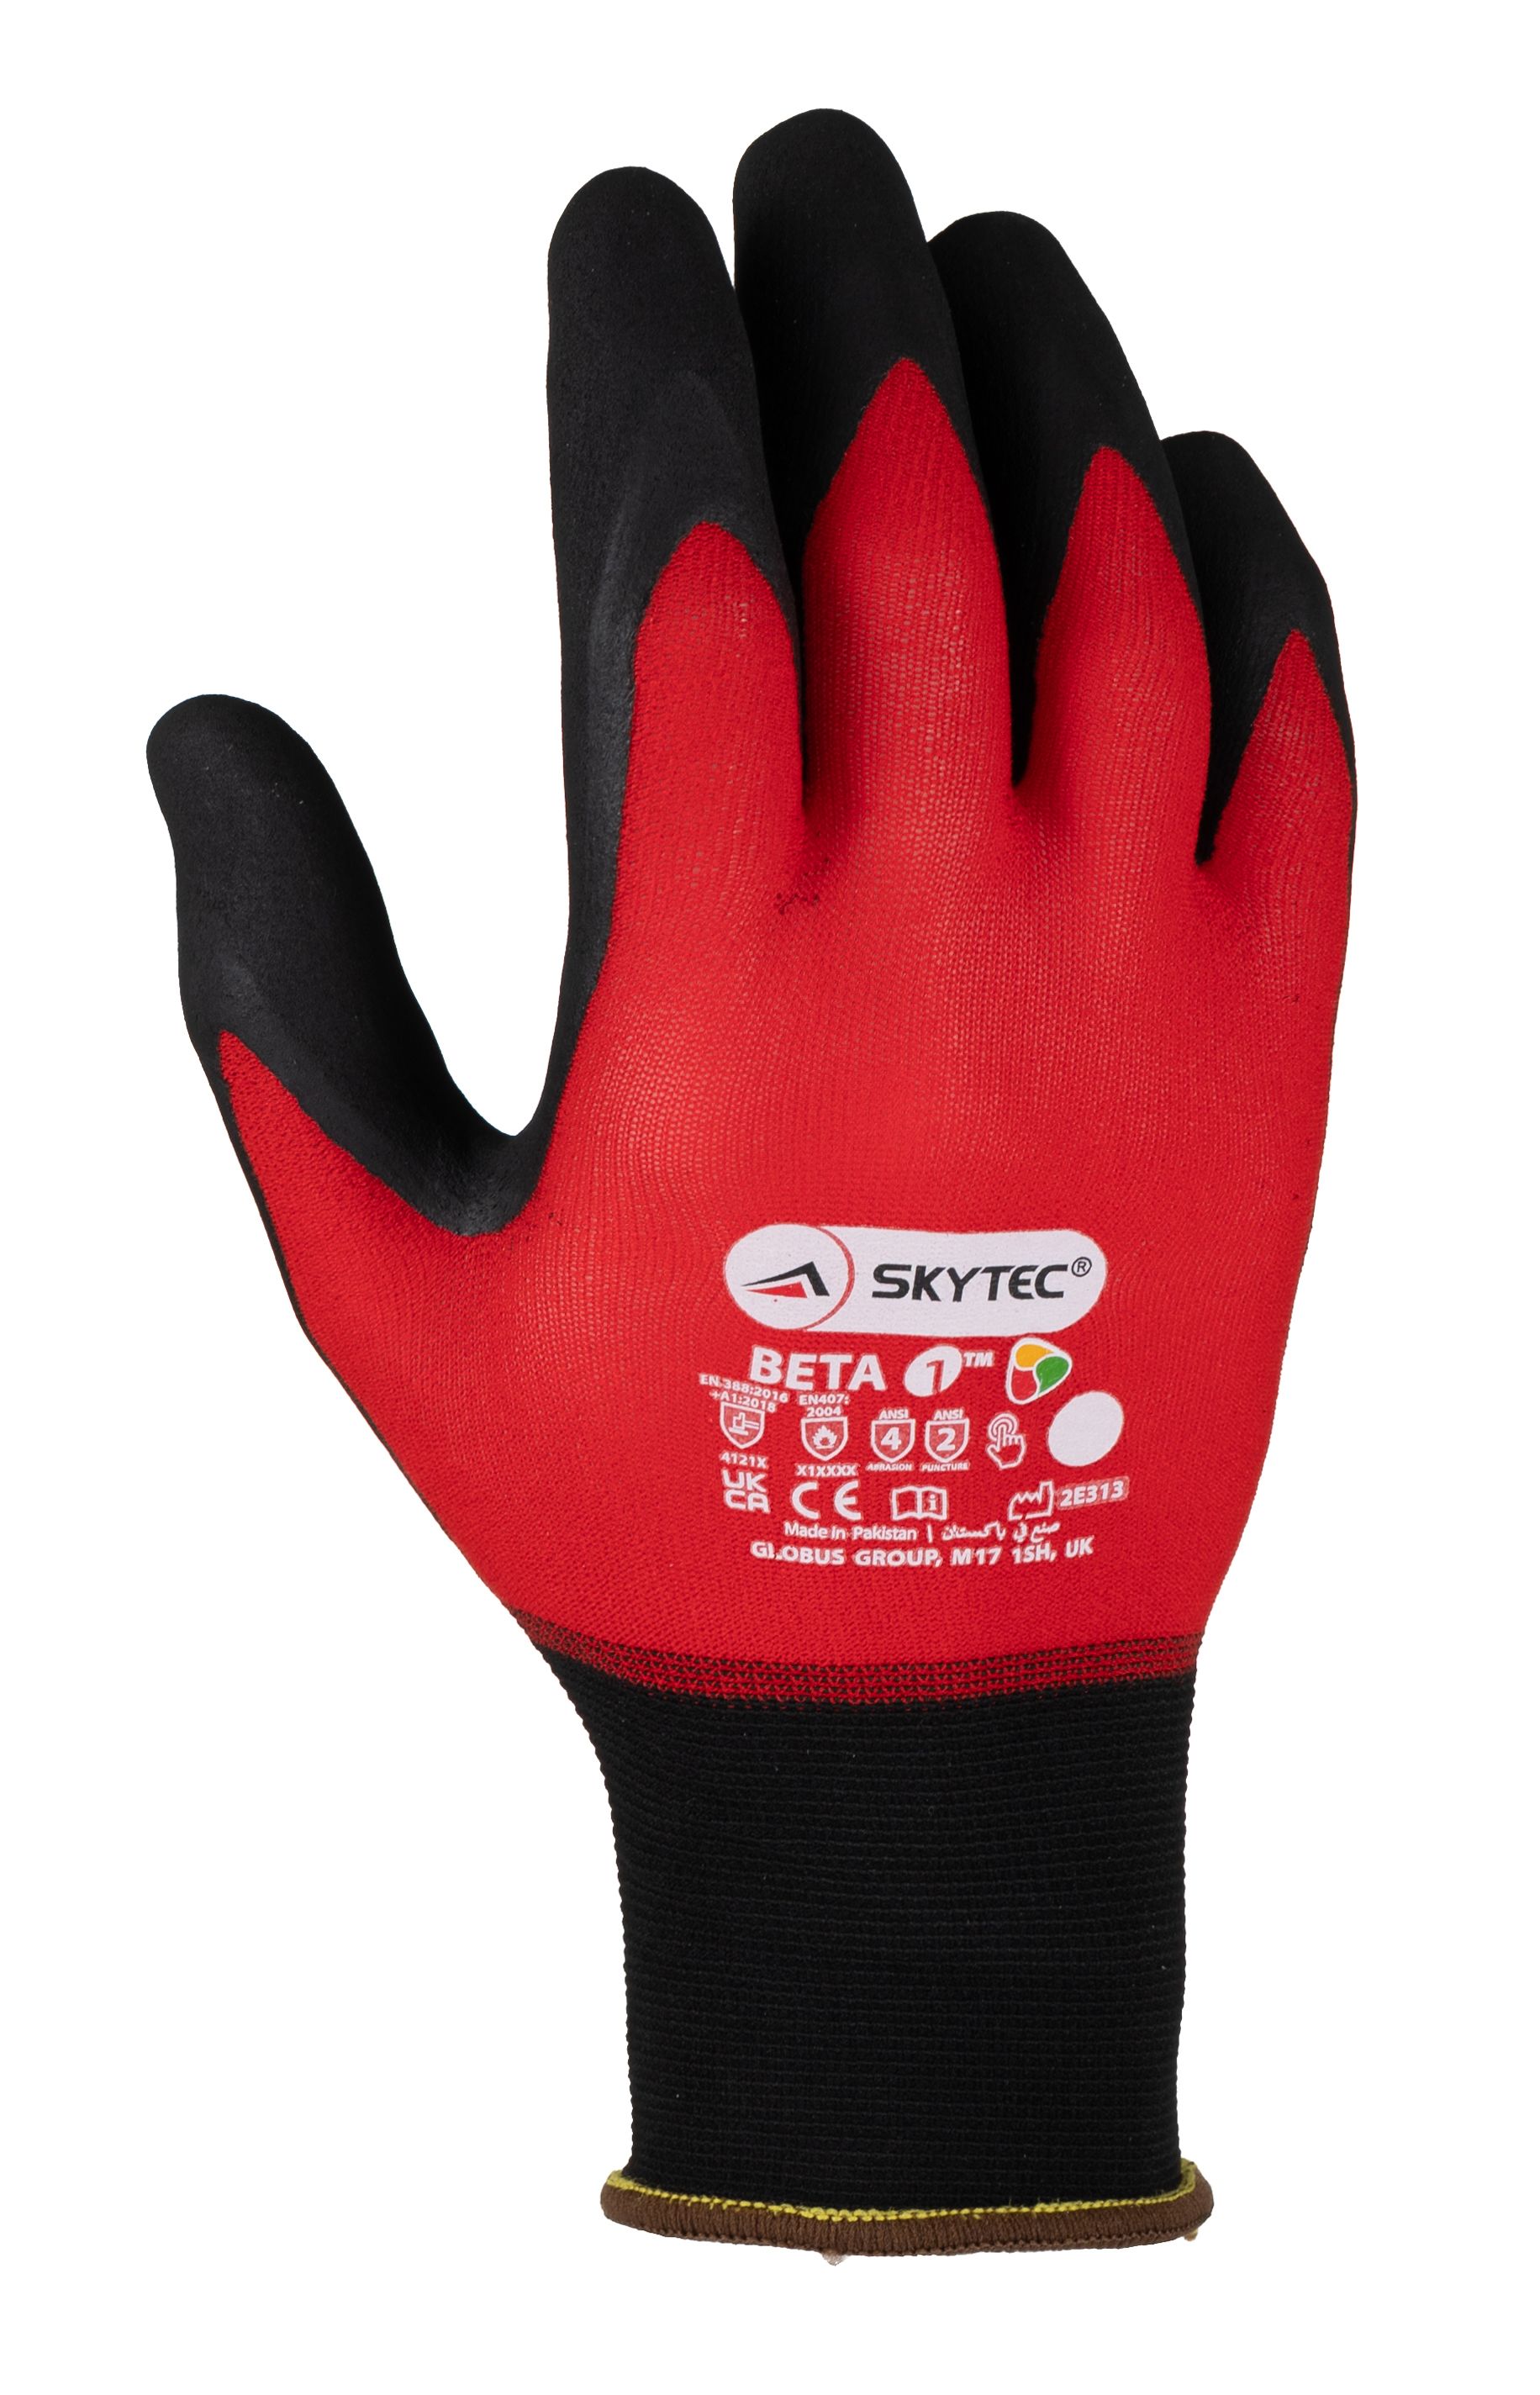 Skytec Red General Purpose Work Gloves, Size 10, Large, Nylon Lining, Nitrile Coating